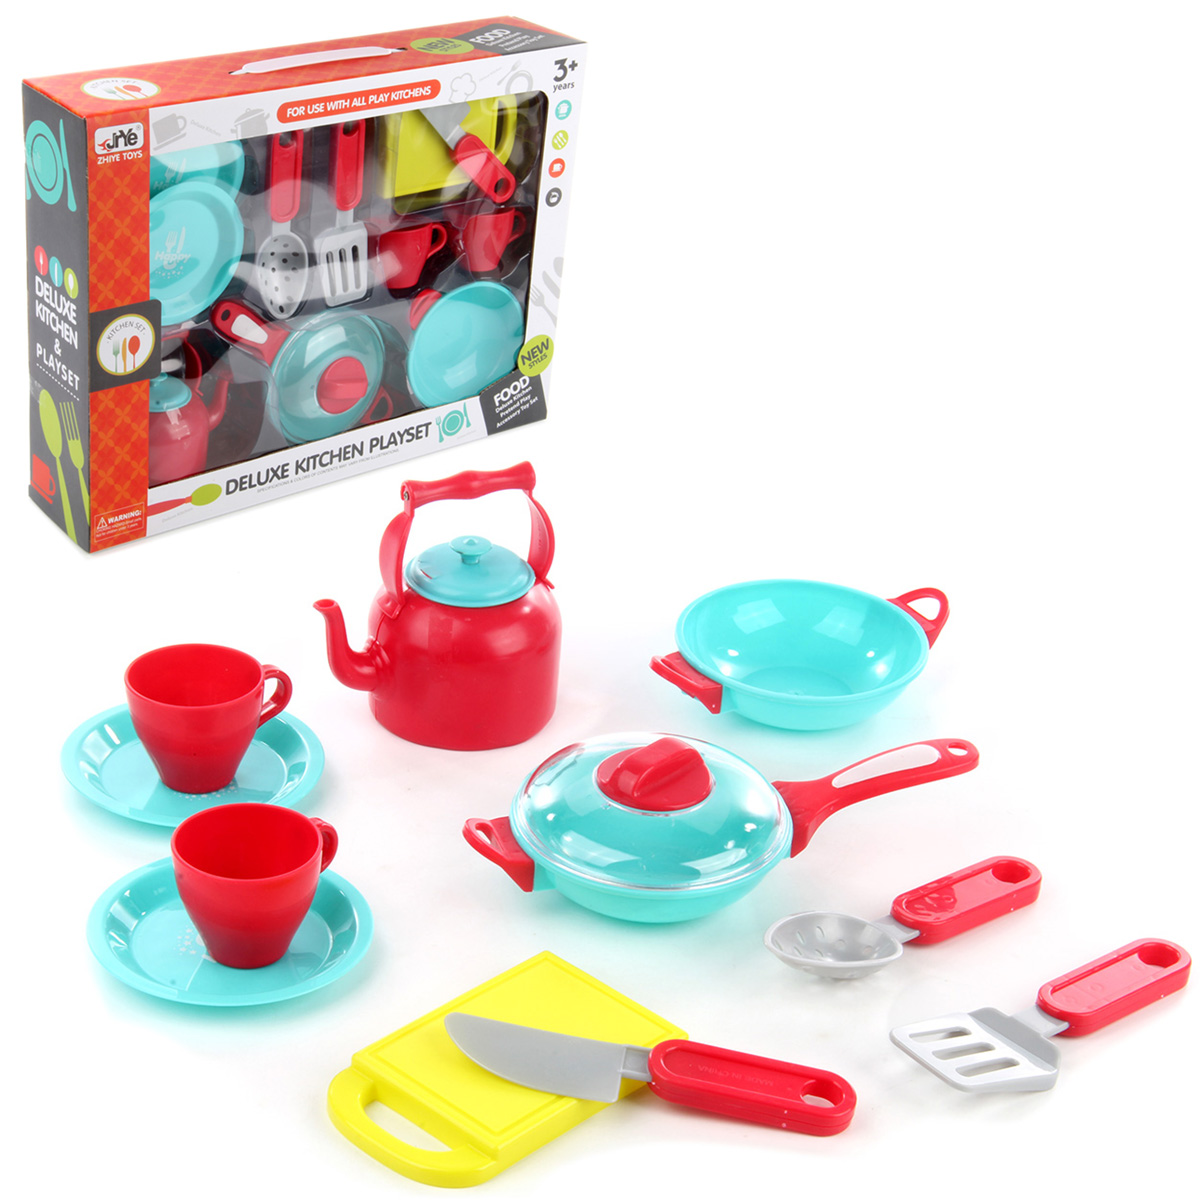 Детская посуда Veld Co 11 предметов - фото 6